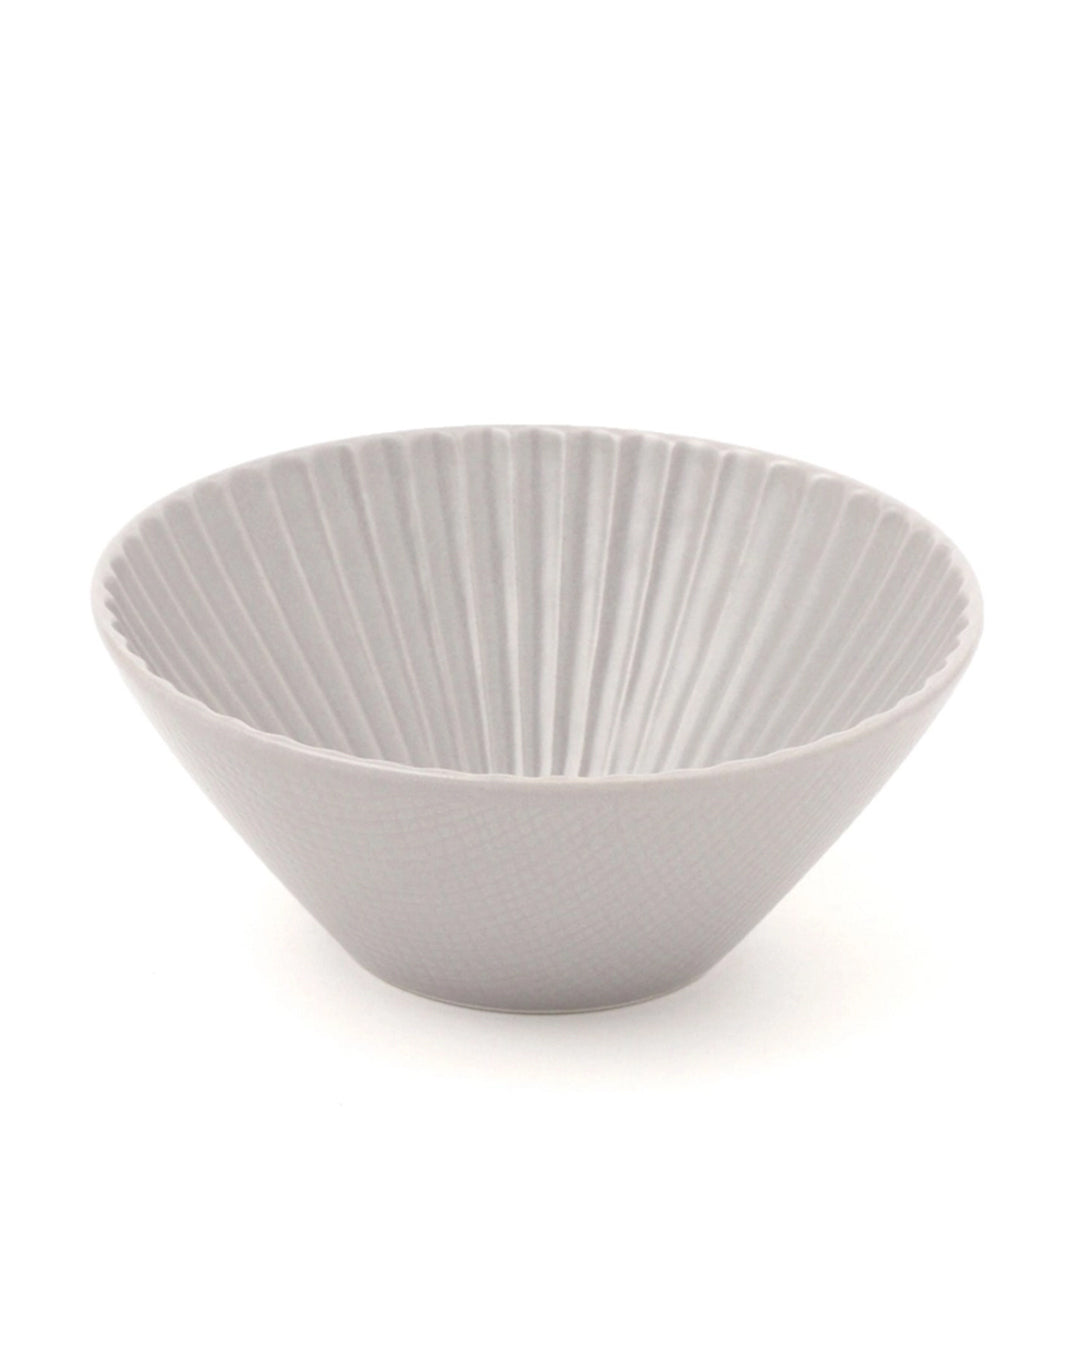 Lakole Mino Ware Medium Serving Bowl - Grey